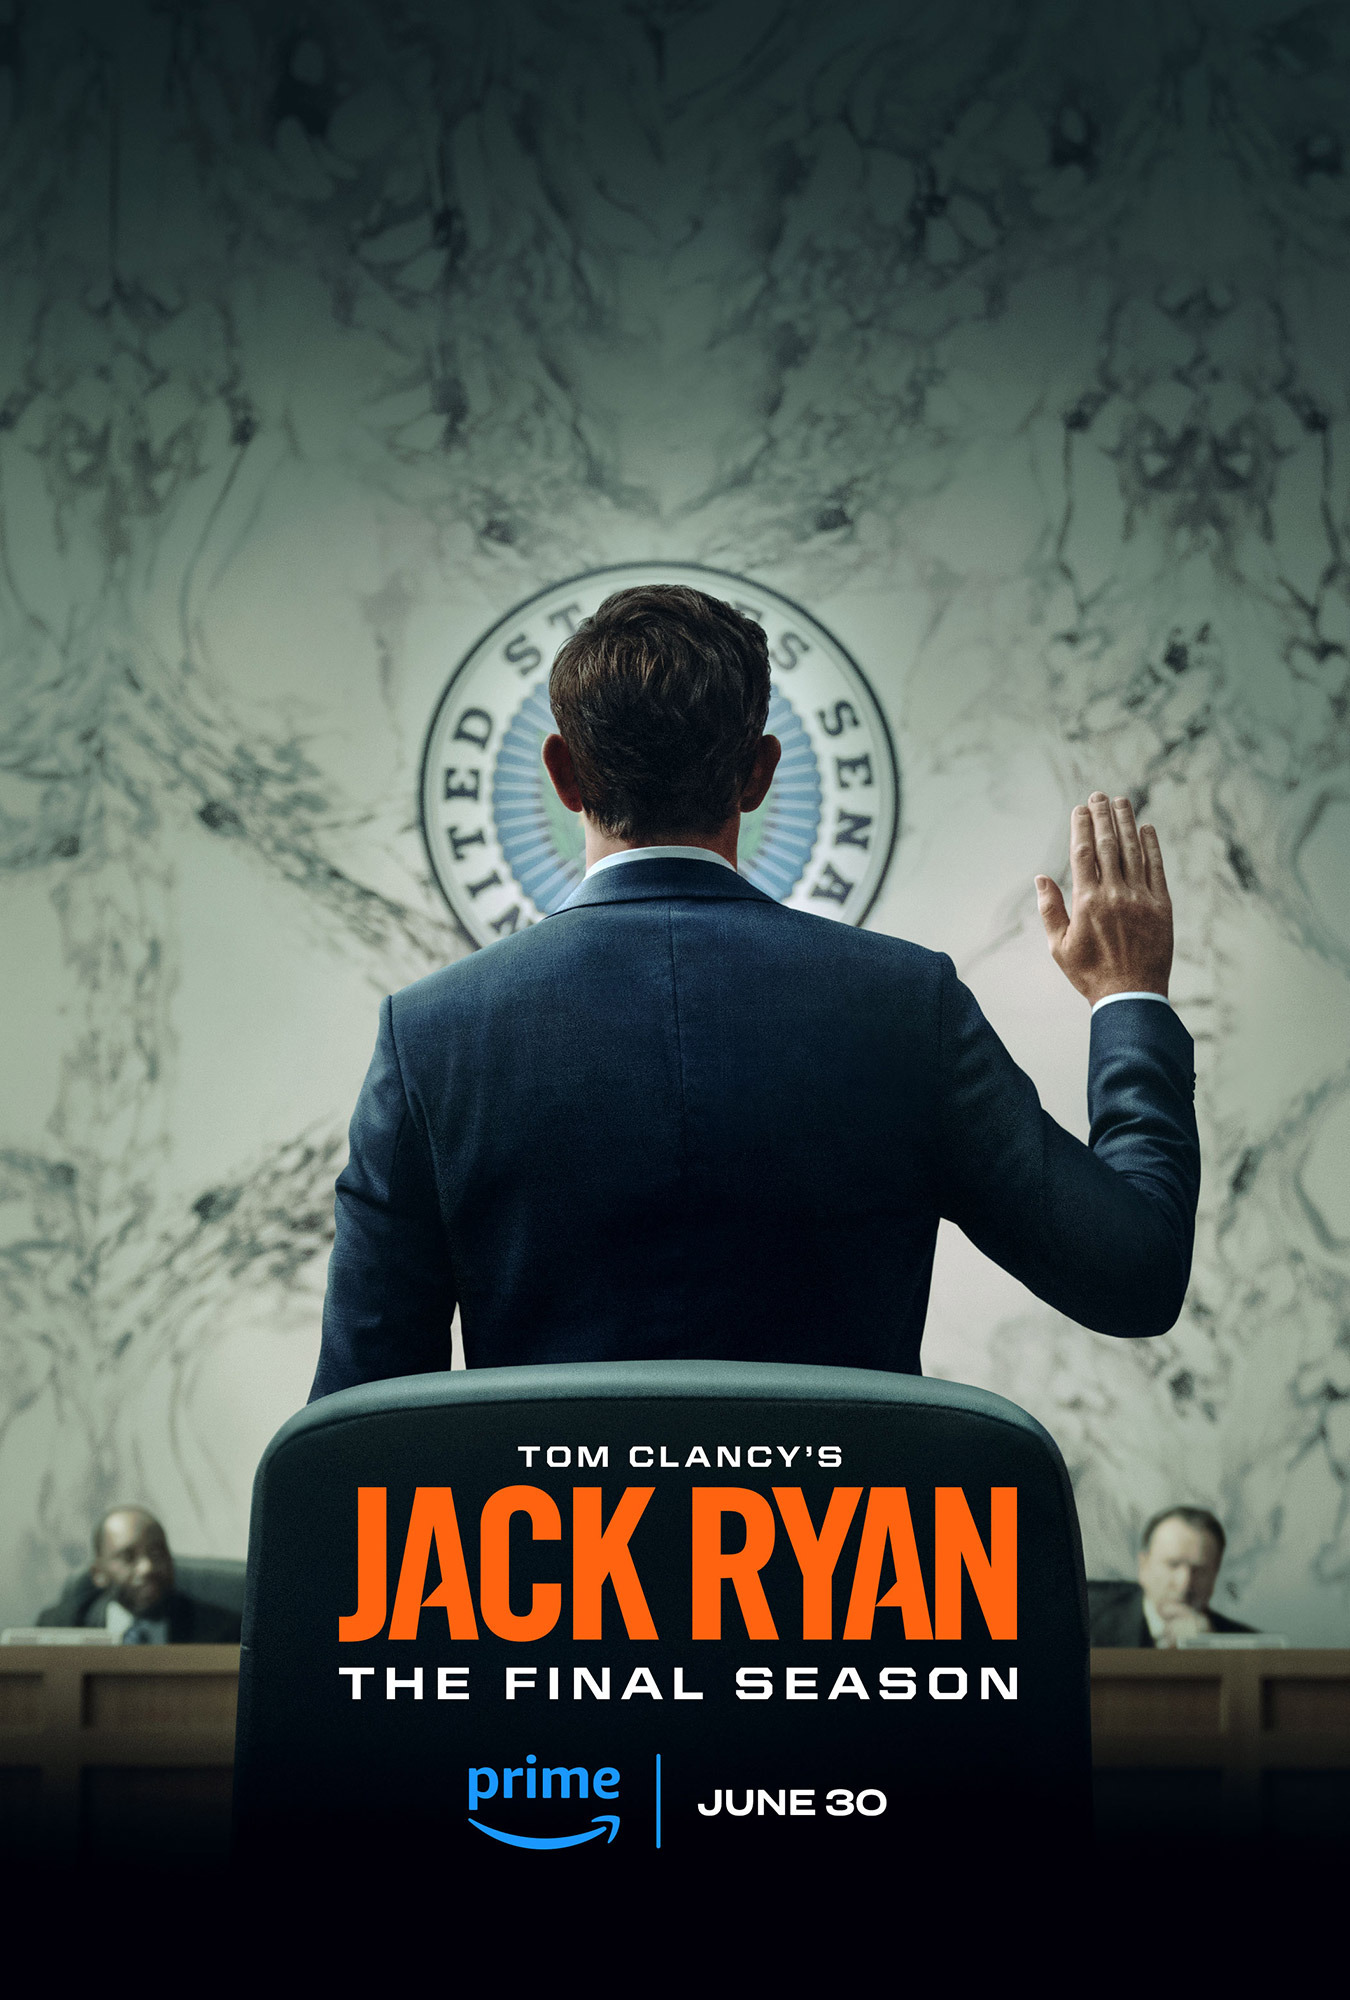 Mega Sized TV Poster Image for Tom Clancy's Jack Ryan (#13 of 13)